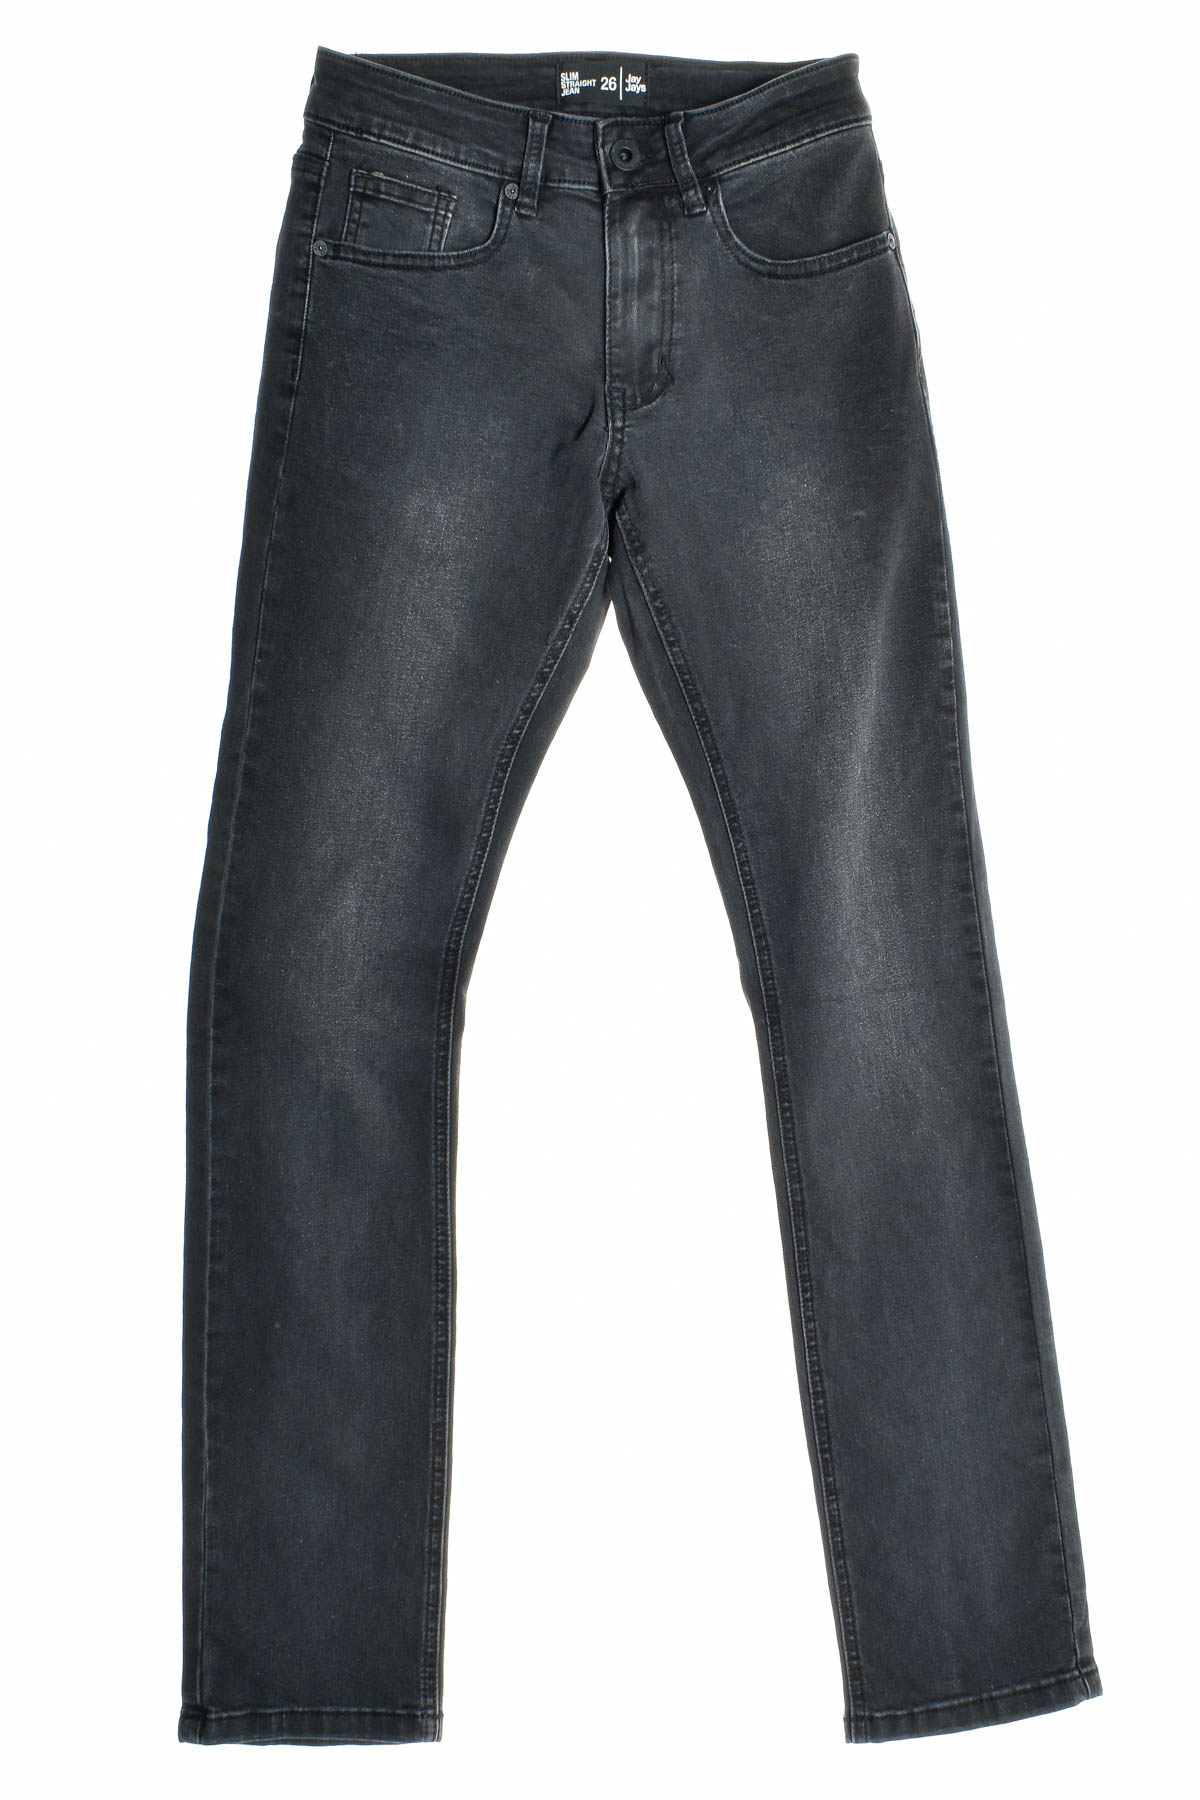 Men's jeans - Jay Jays - 0